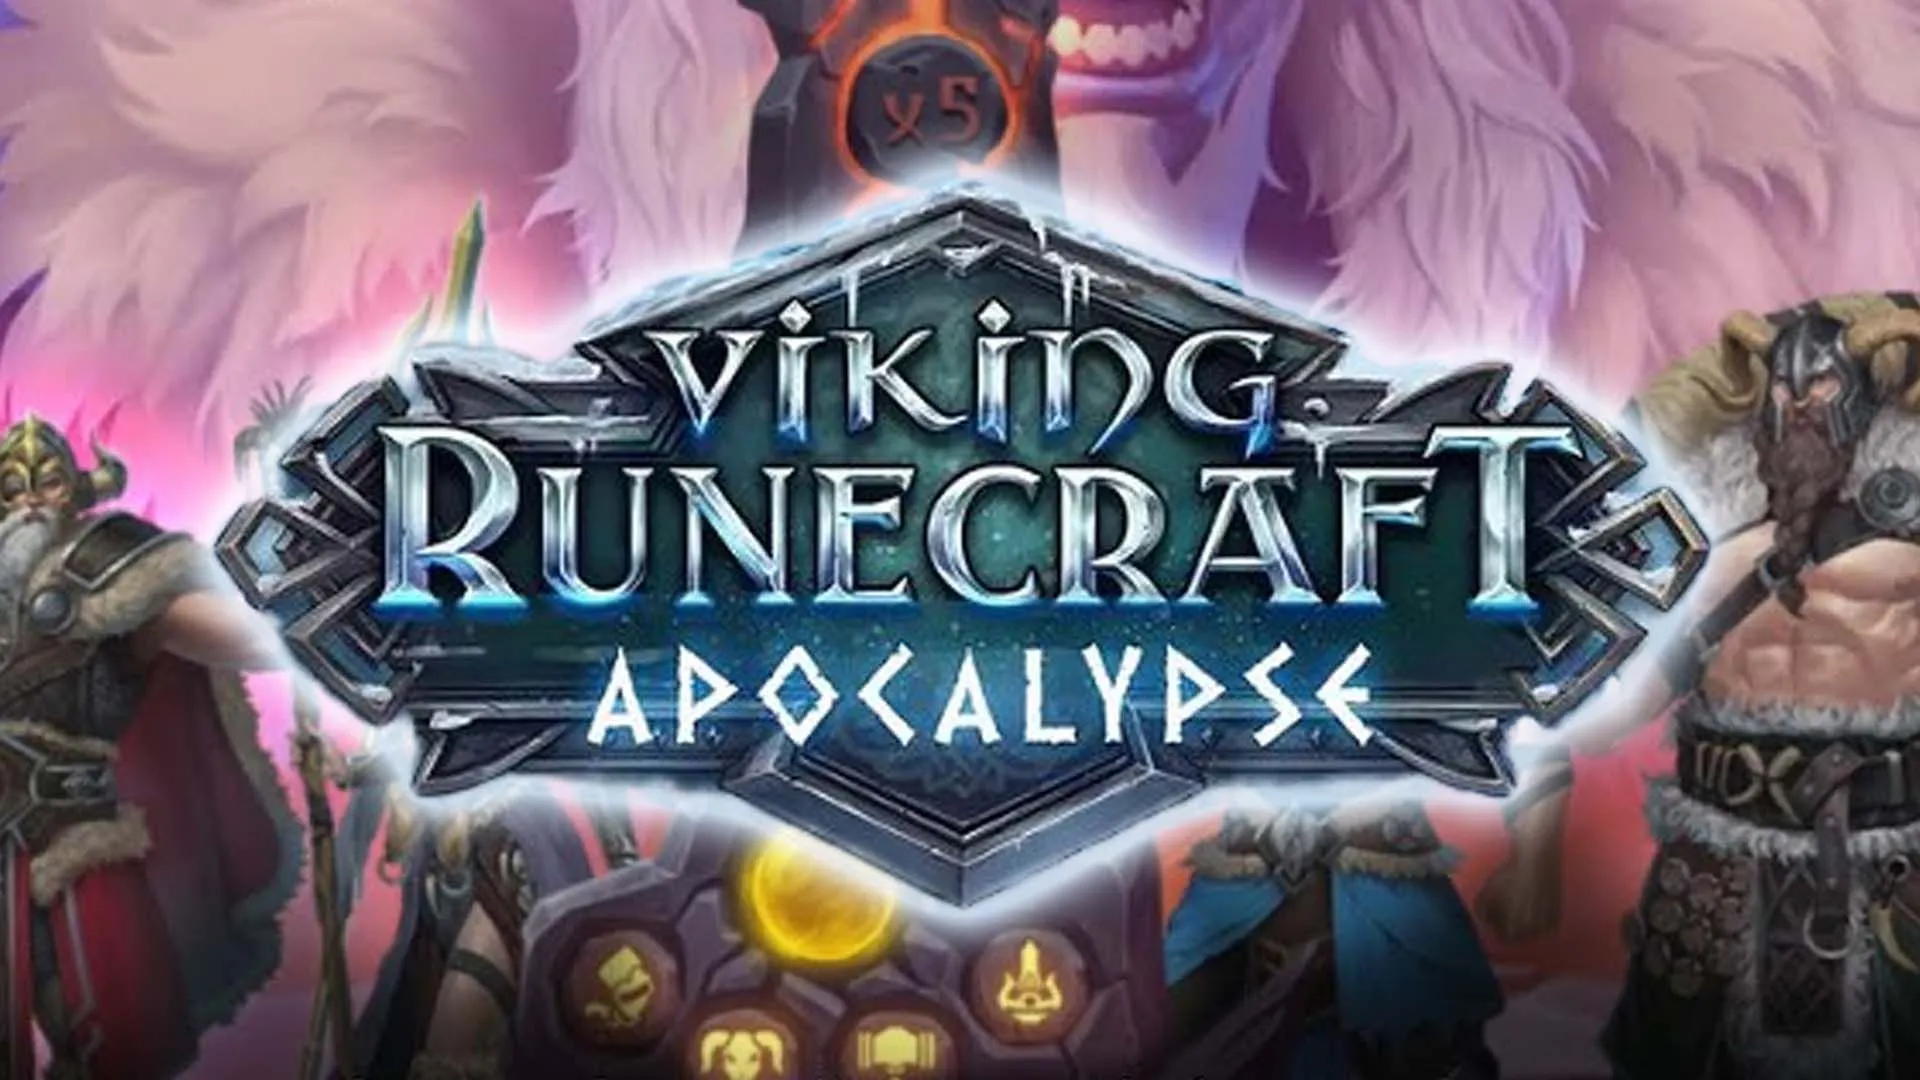 Viking Runecraft Apocalypse Slot Demo